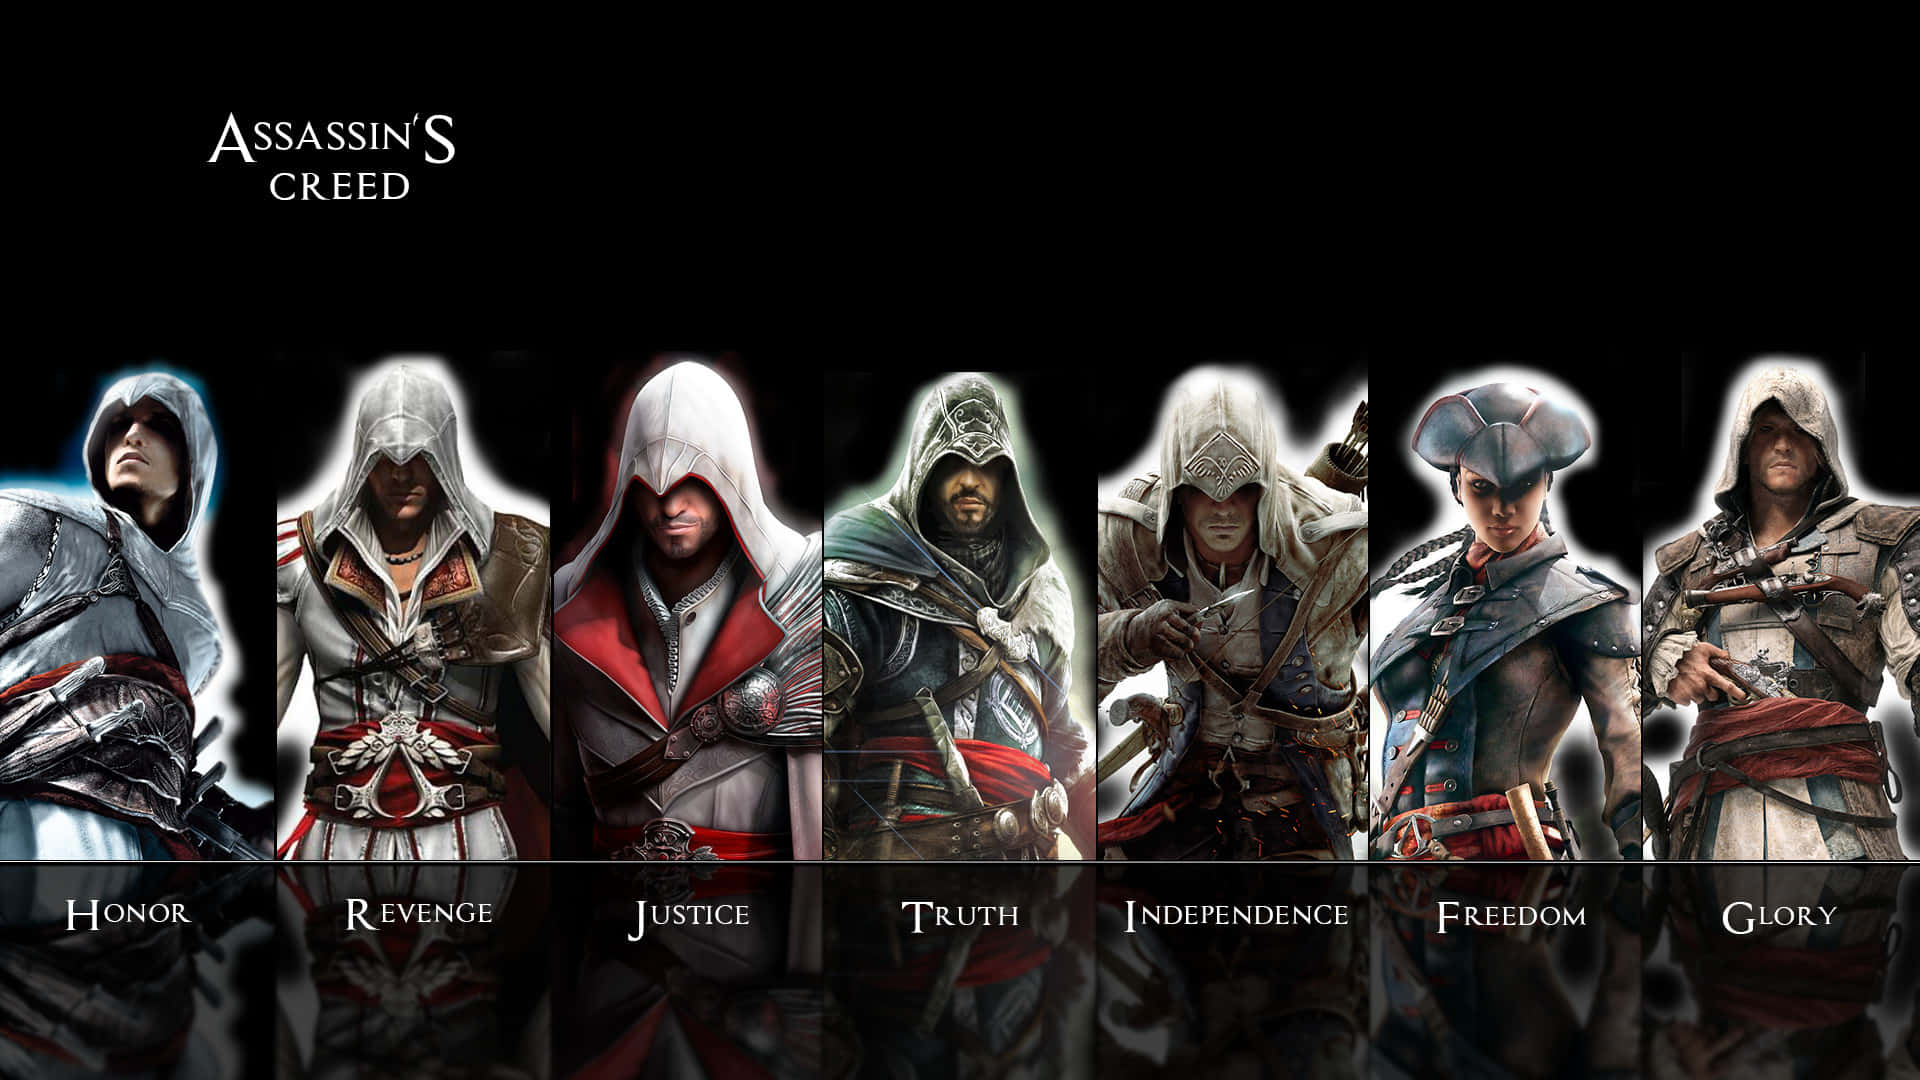 Unareunión Feroz De Prominentes Personajes De Assassin's Creed. Fondo de pantalla